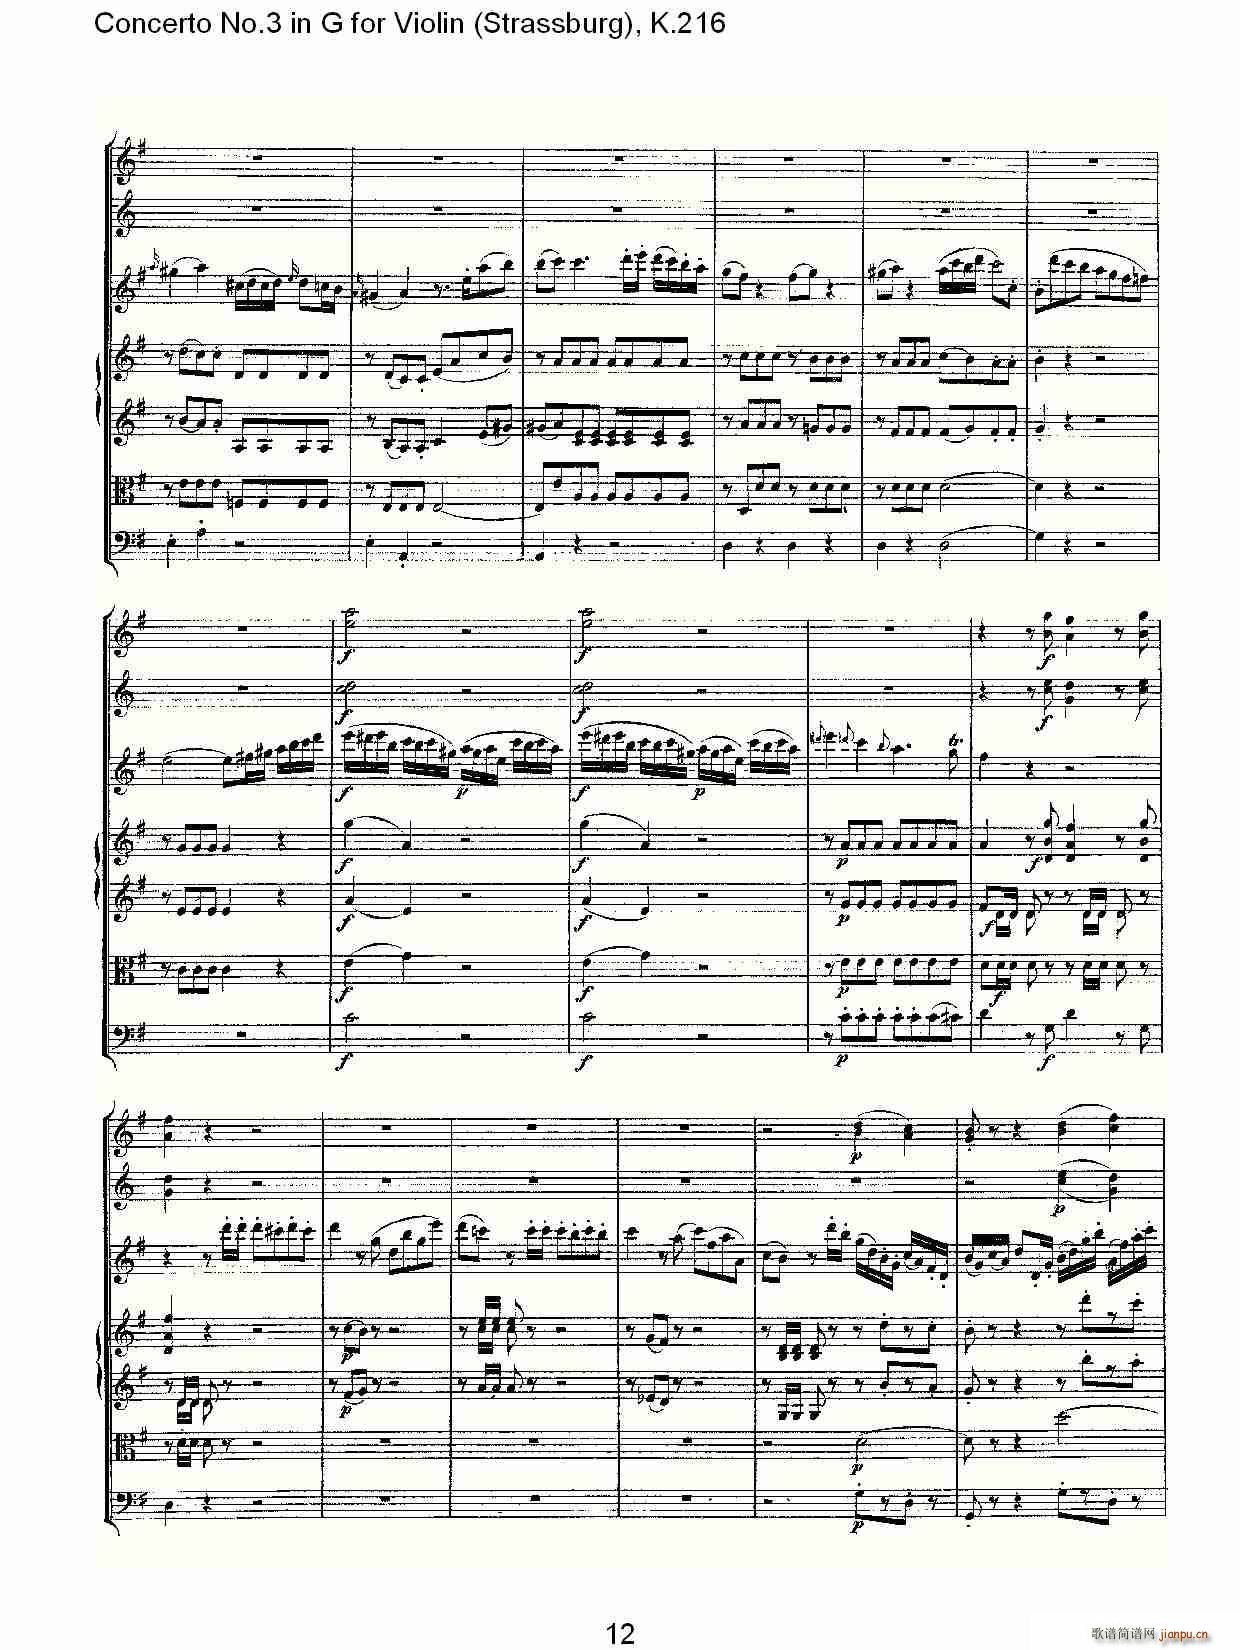 Concerto No.3 in G for Violin K.216(С)12